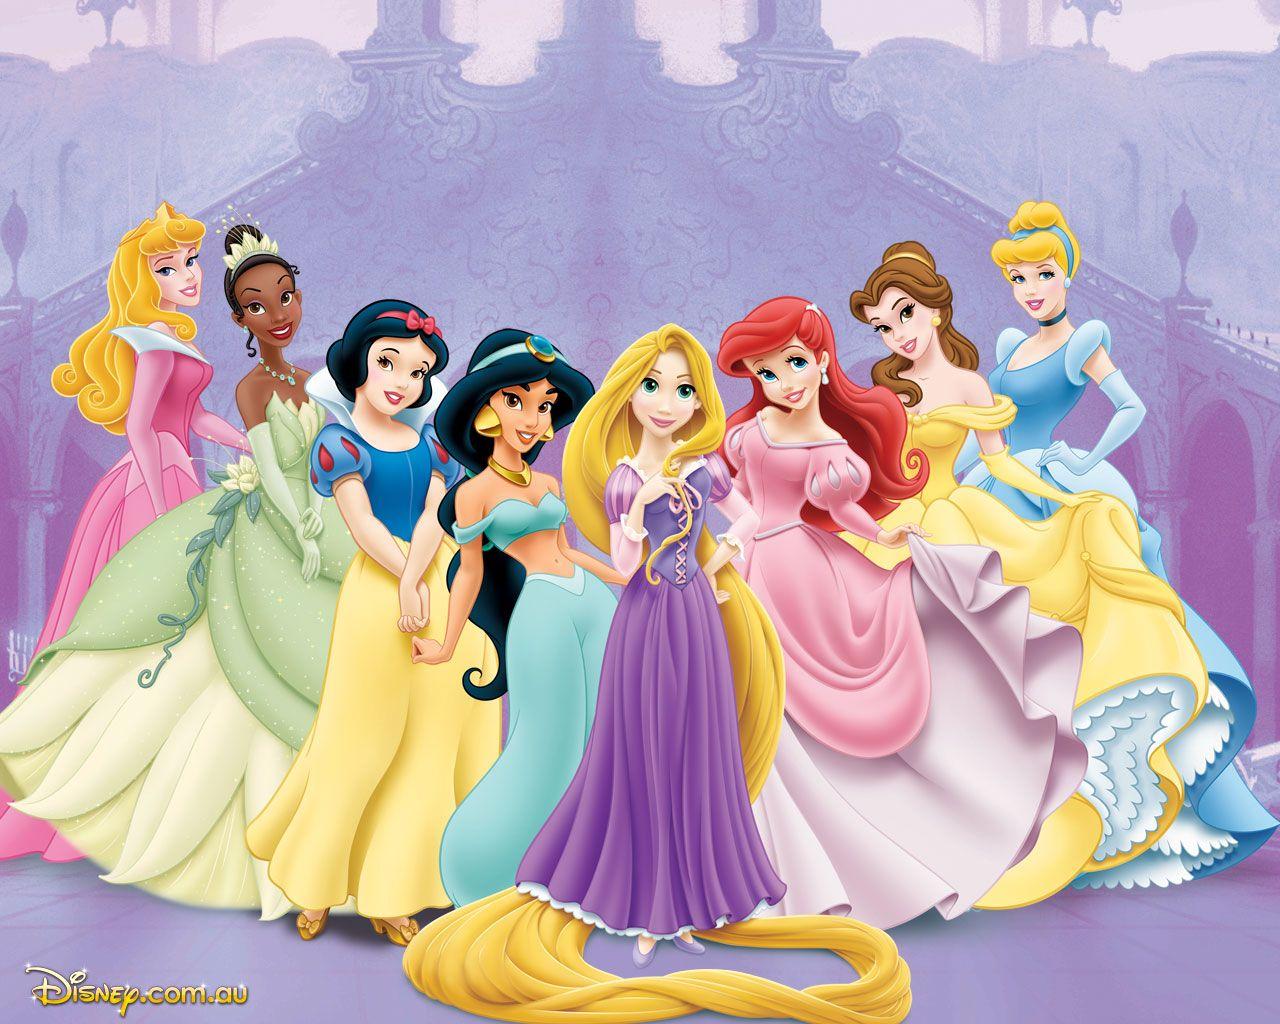 Disney Princess Wallpaper, HD Creative Disney Princess